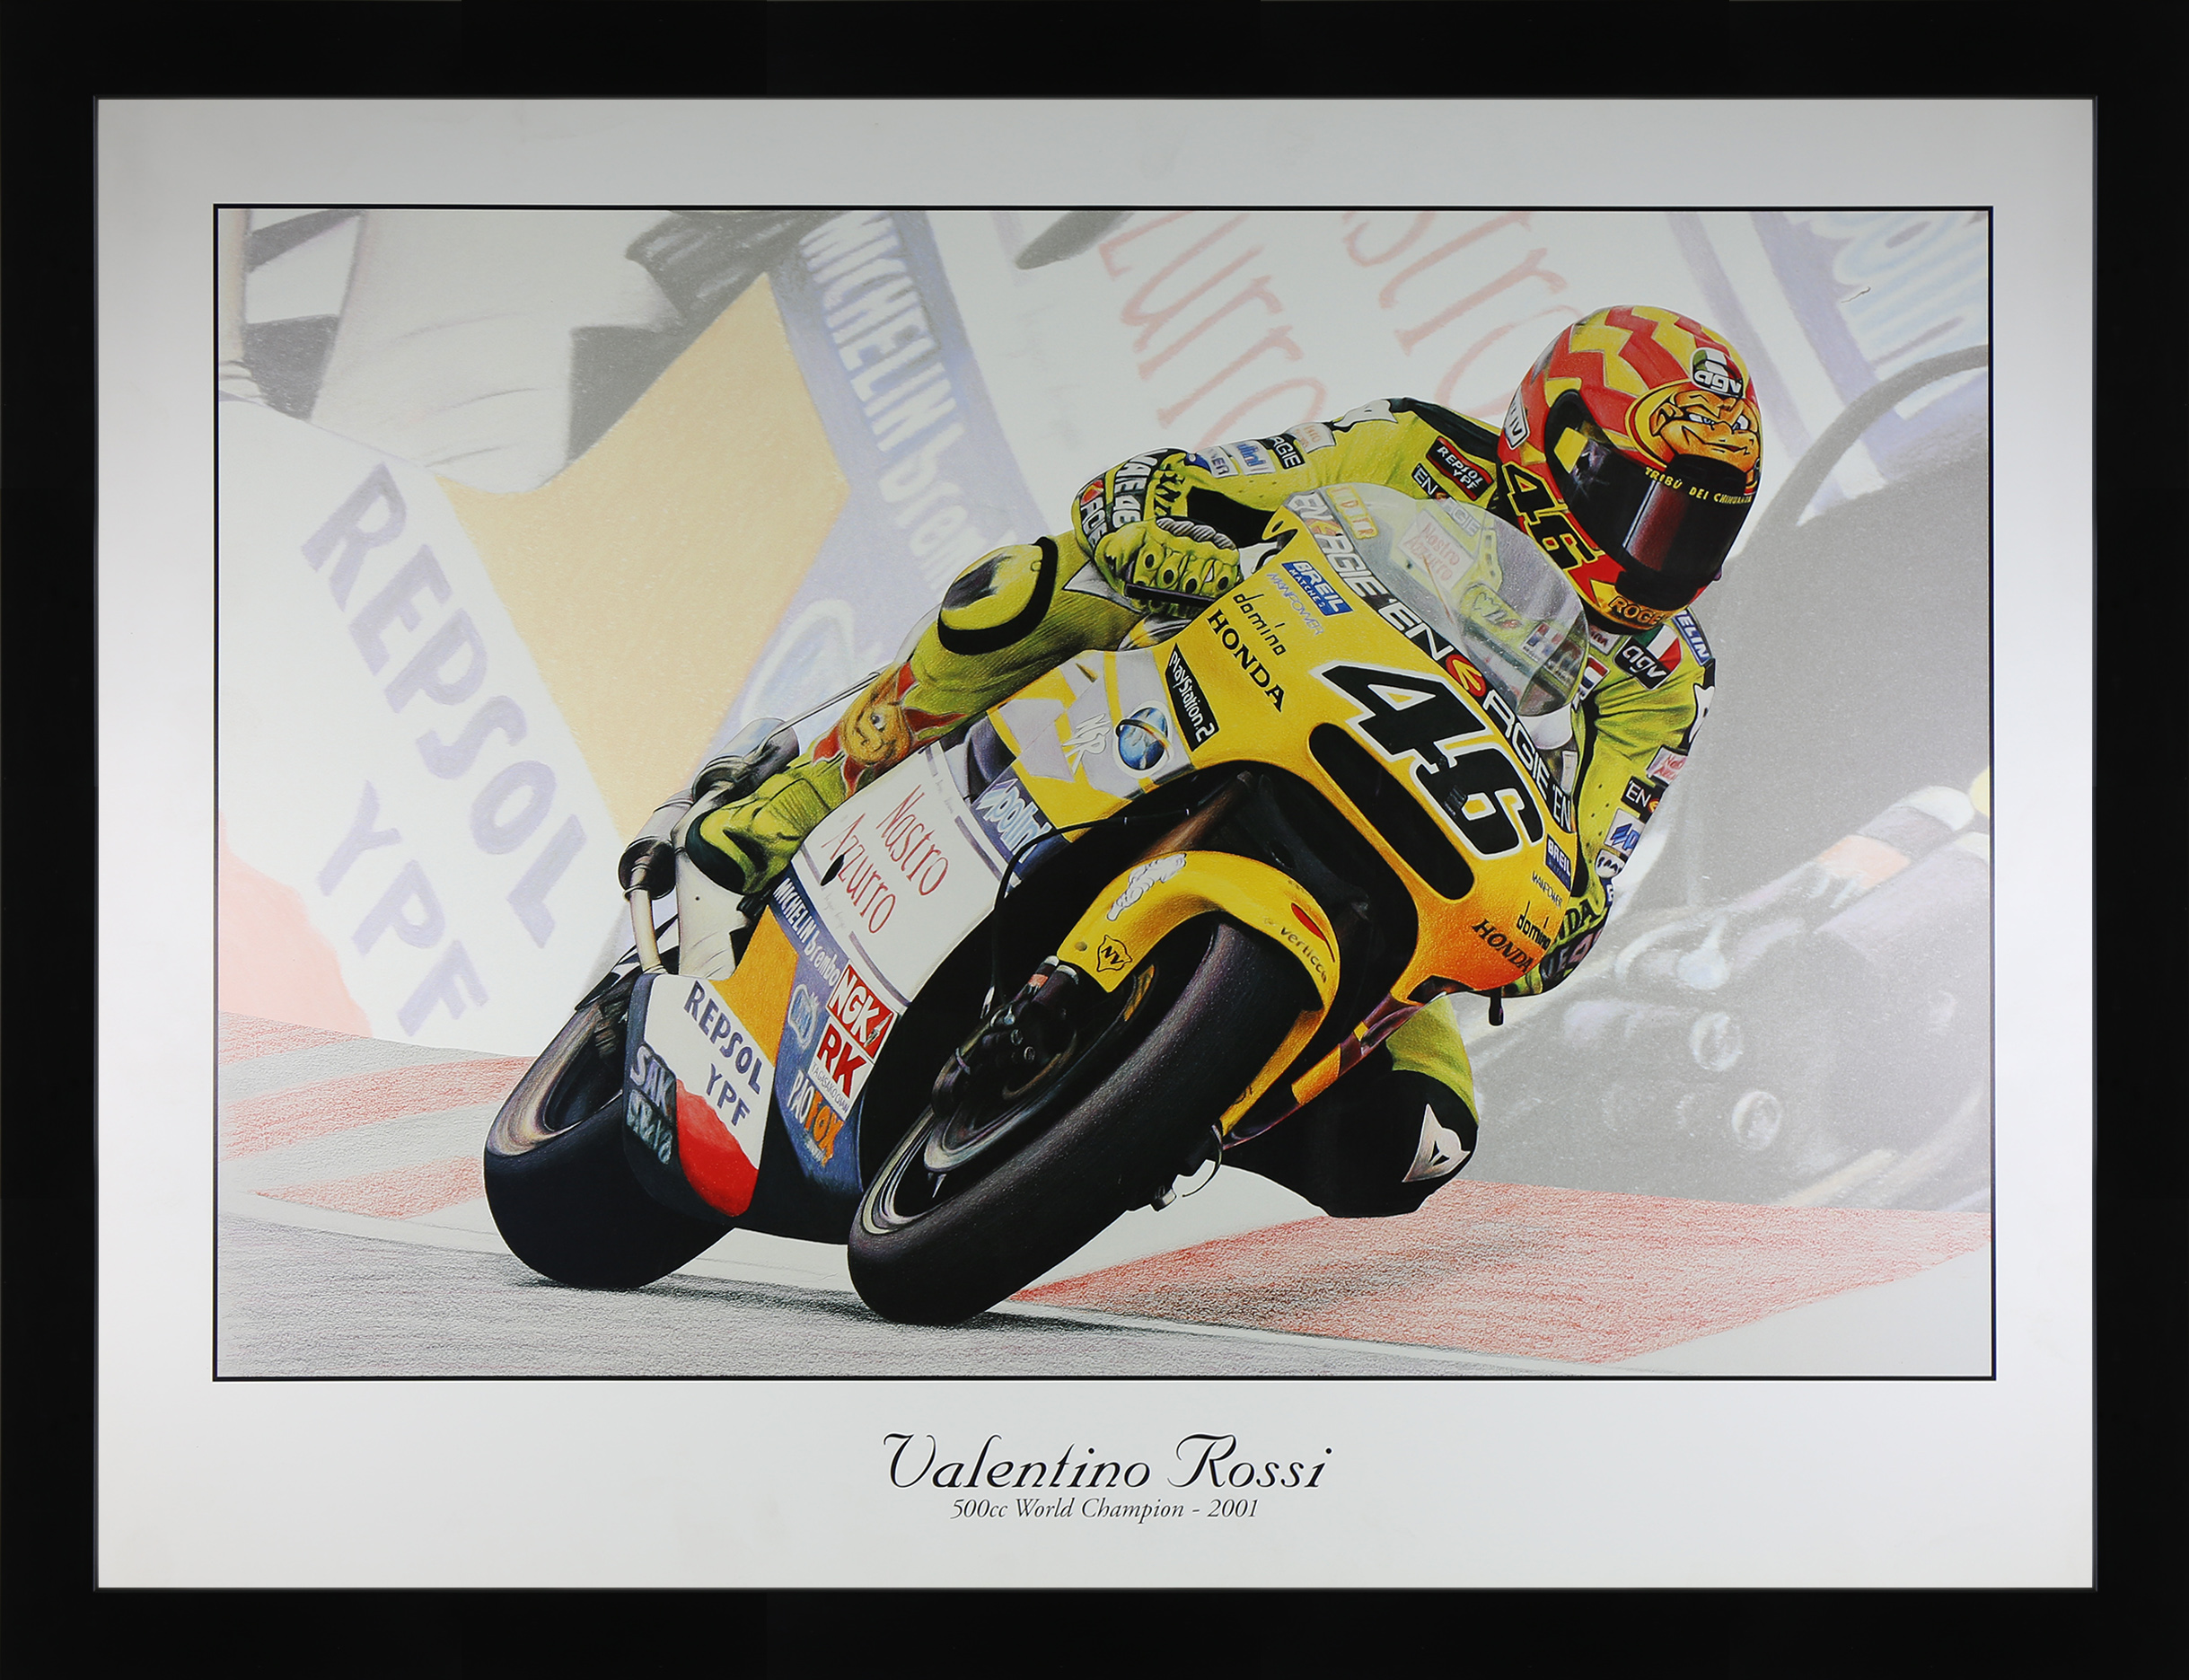 Valentino Rossi 2001 500cc Moto GP Framed Poster. Valentino Rossi "The Doctor" 2001 500cc Moto GP World Champion.